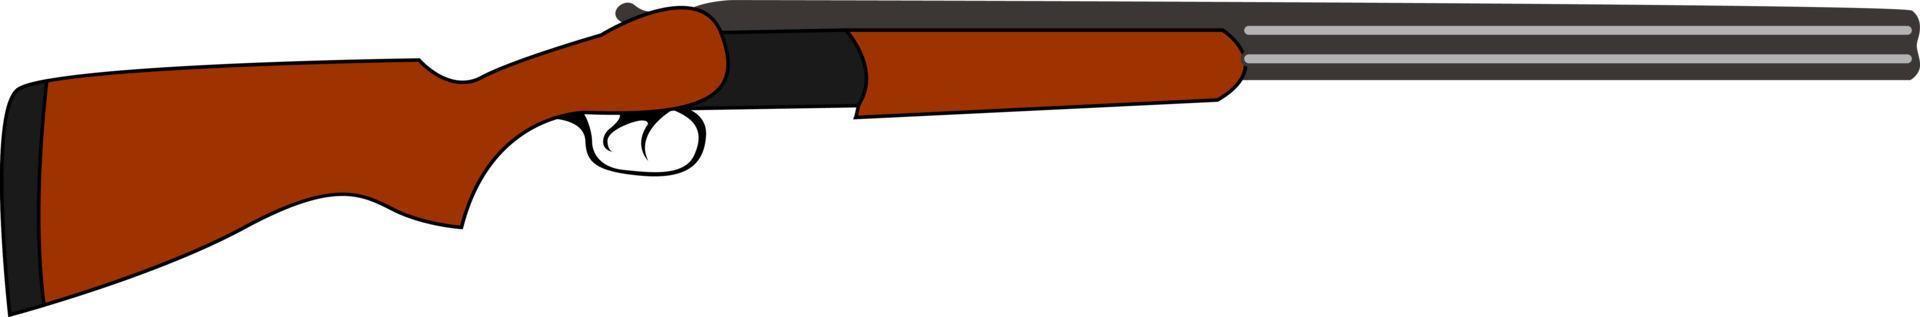 Shotgun weapon, illustration, vector on white background.